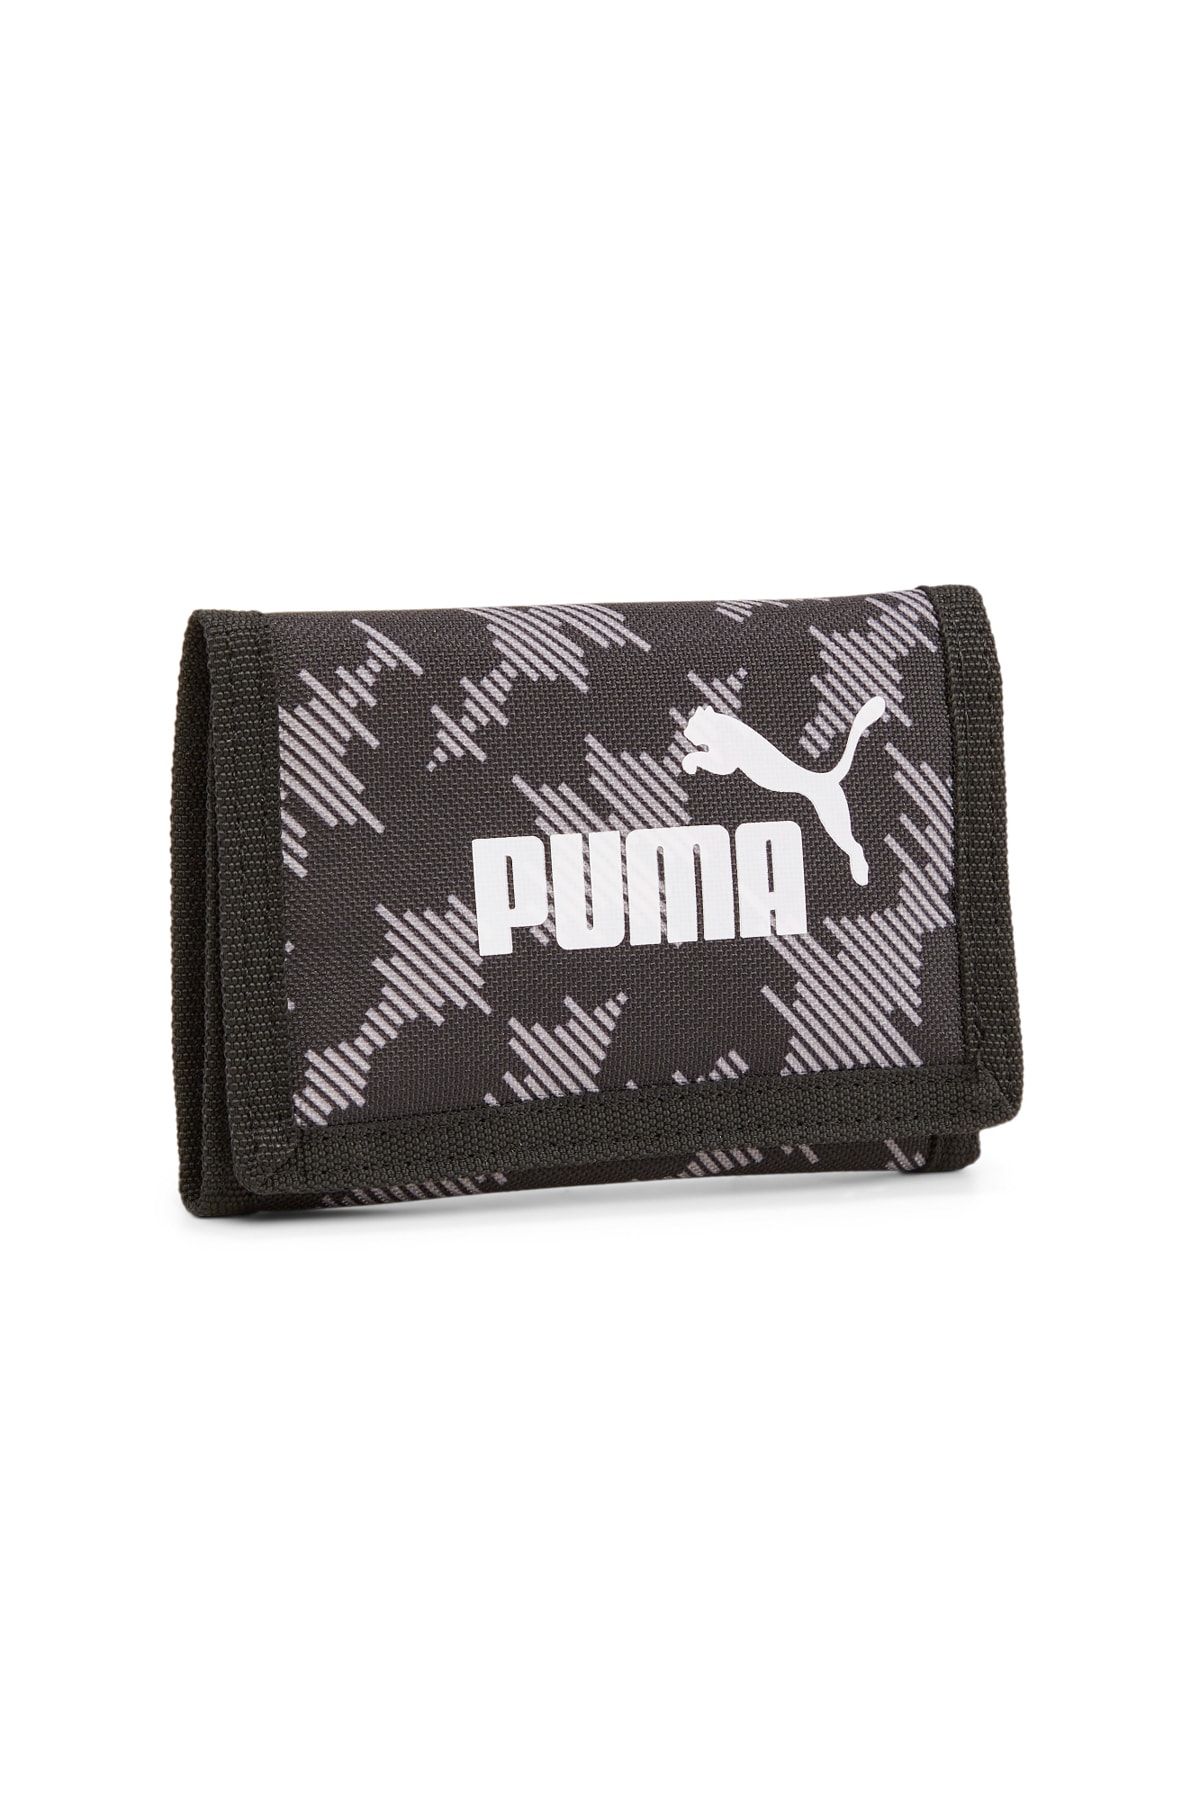 Puma 54364 Wallets Unisex